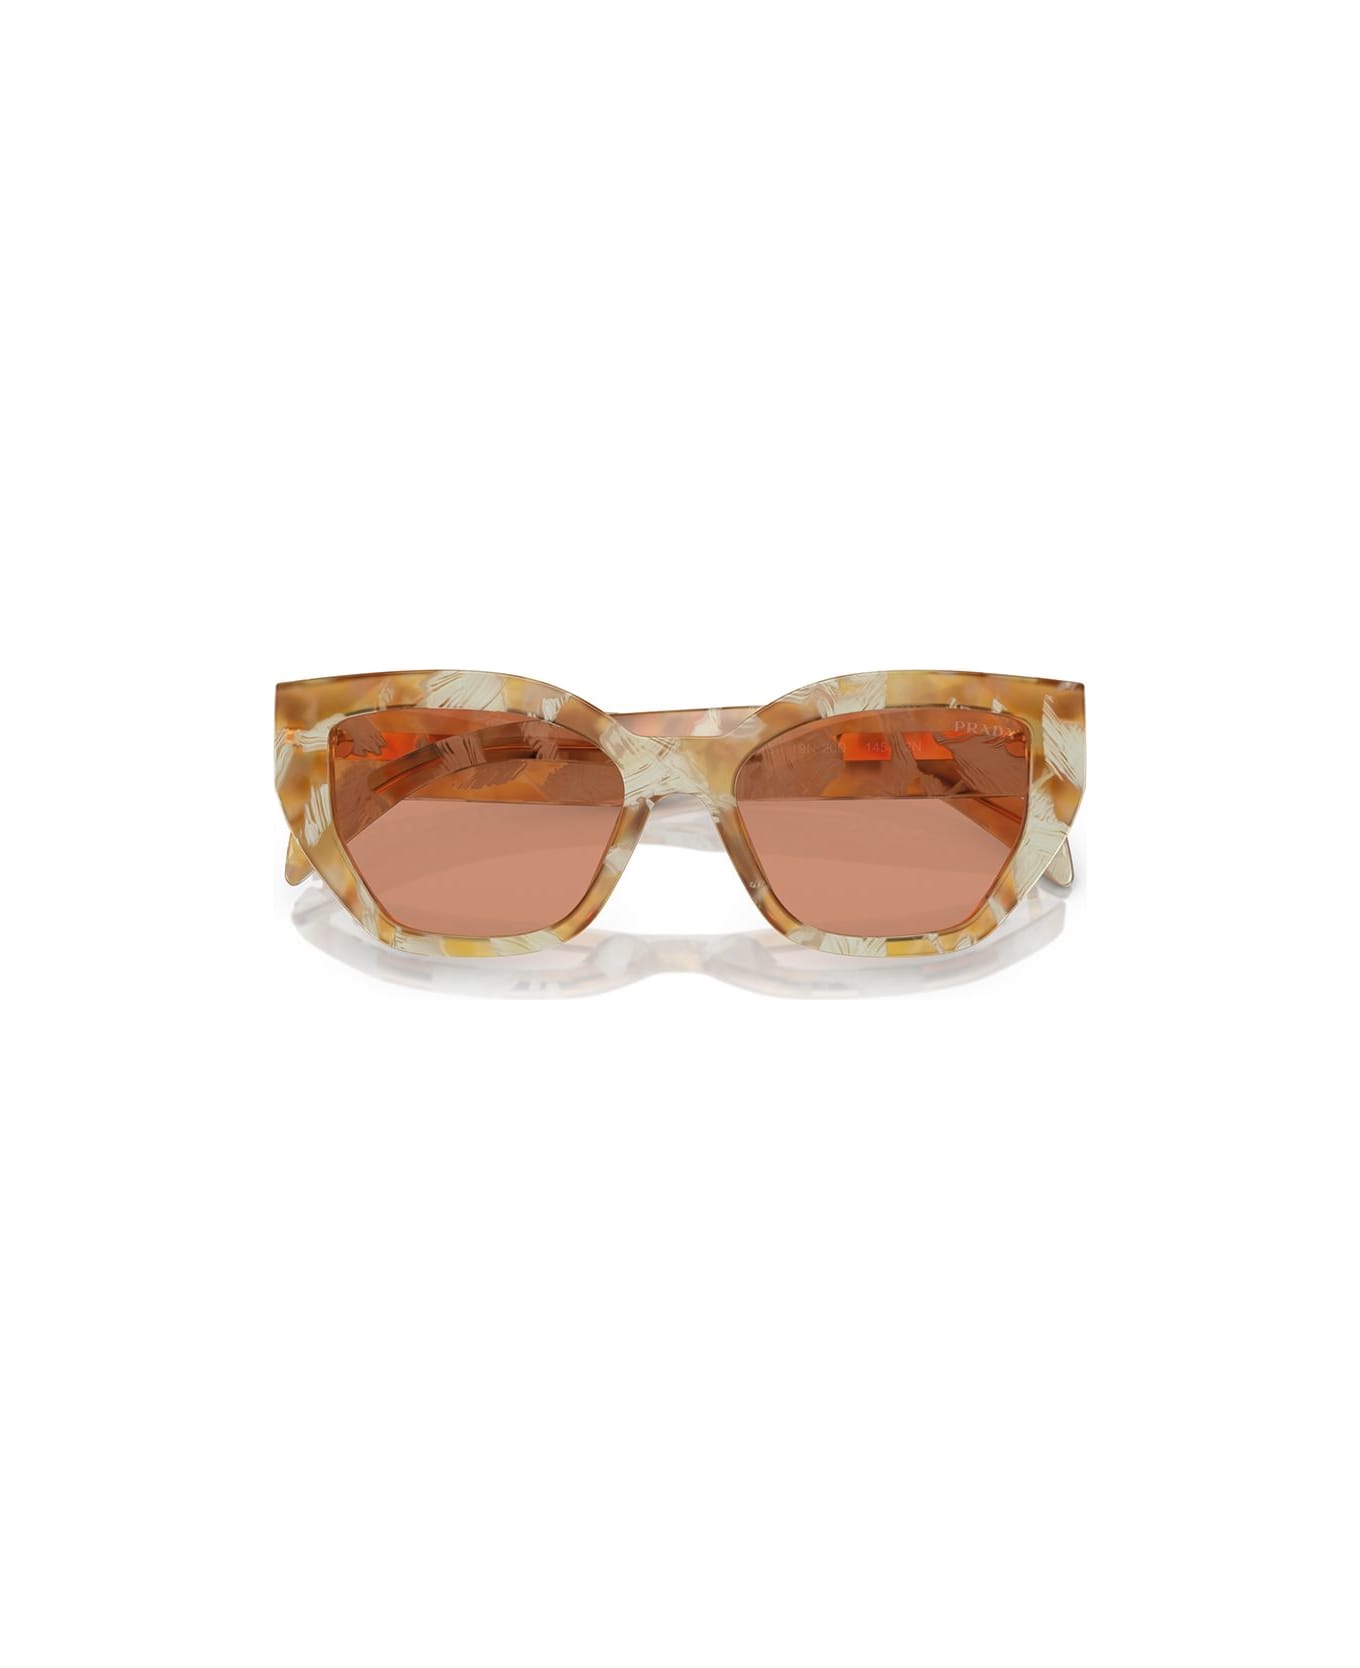 Prada Eyewear Sunglasses - 19N20D